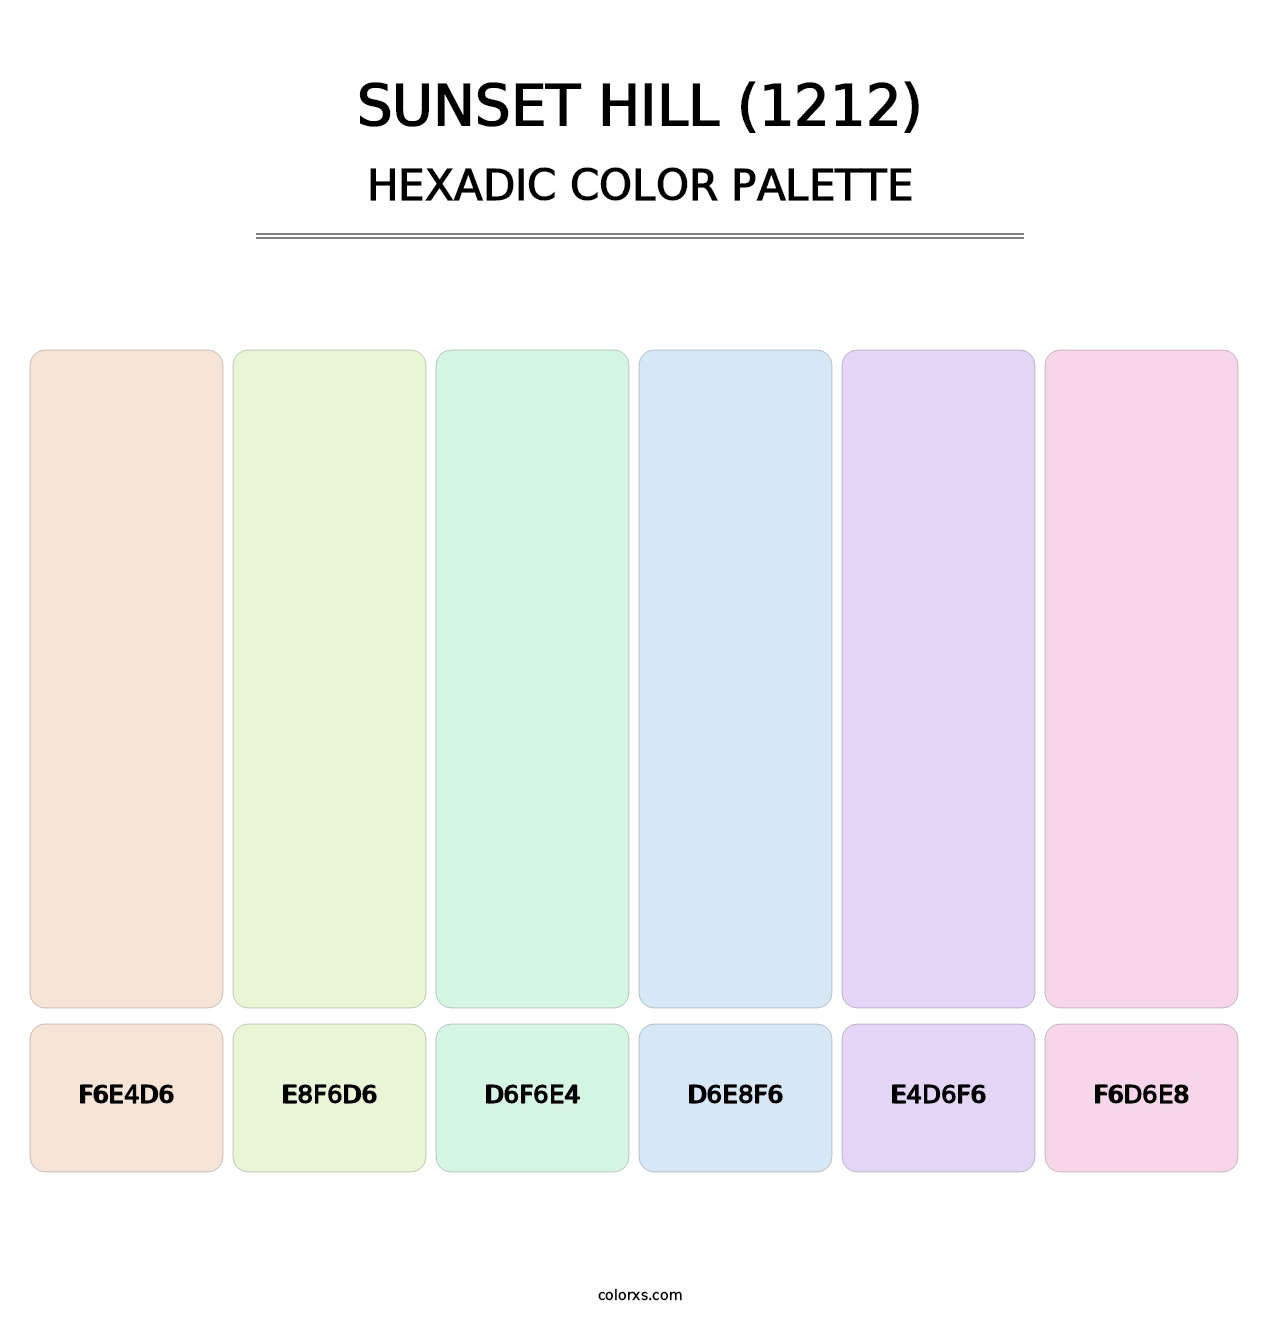 Sunset Hill (1212) - Hexadic Color Palette